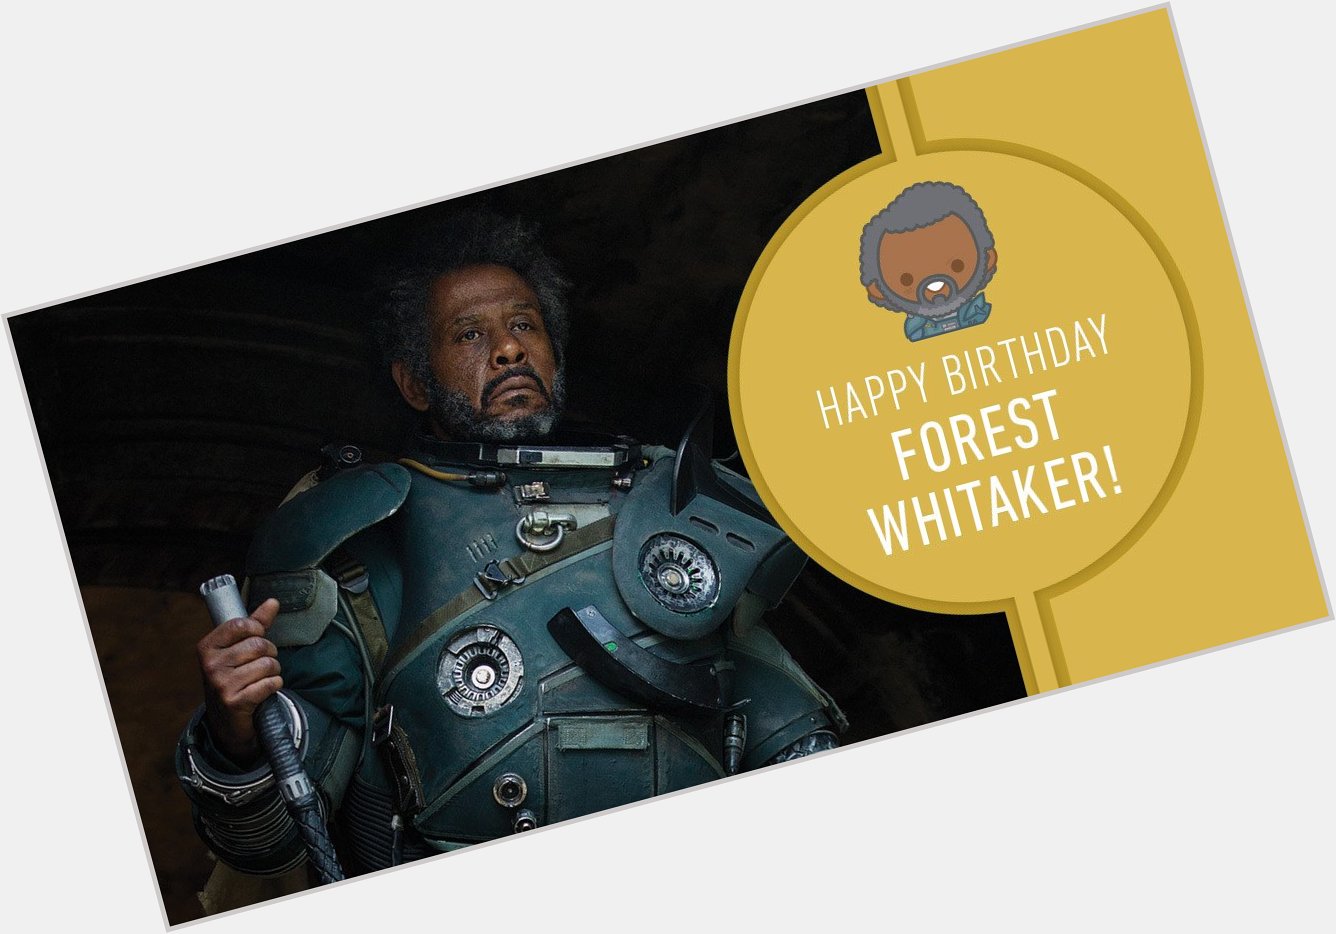 Happy Birthday, Forest Whitaker! 